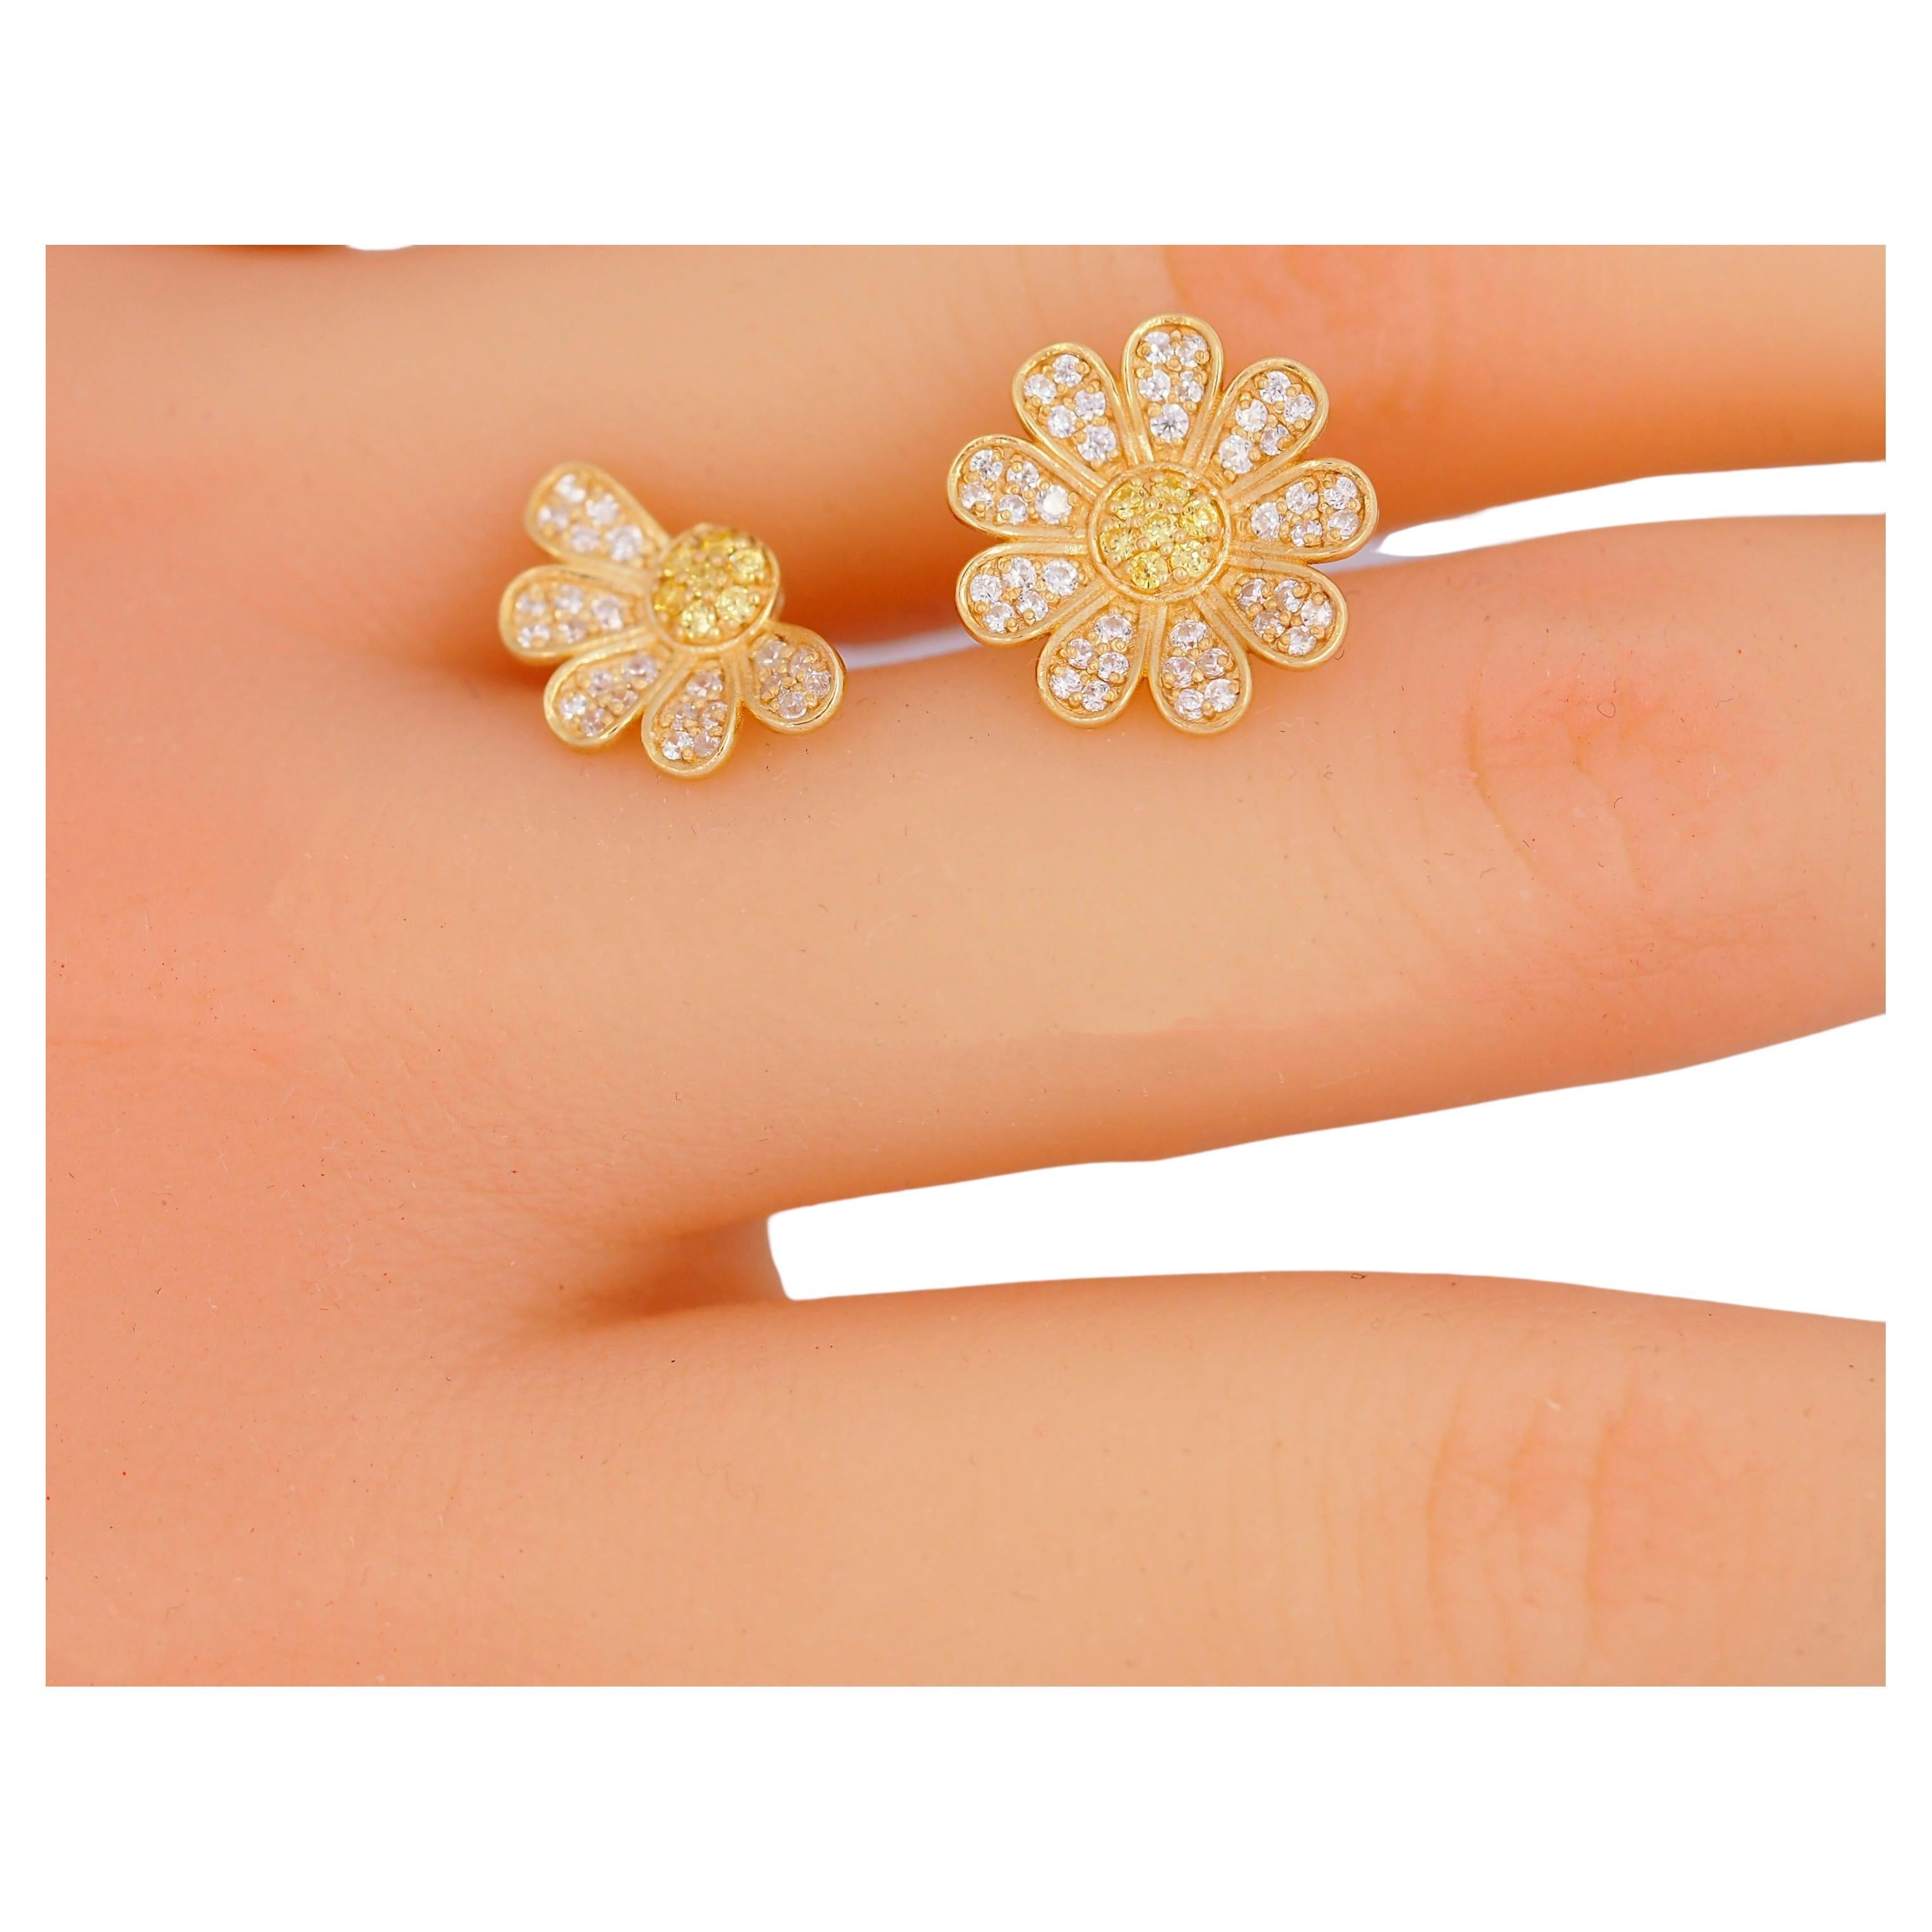 Daisy flower 14k gold earrings: Love Me, Love Me Not earrings studs For Sale